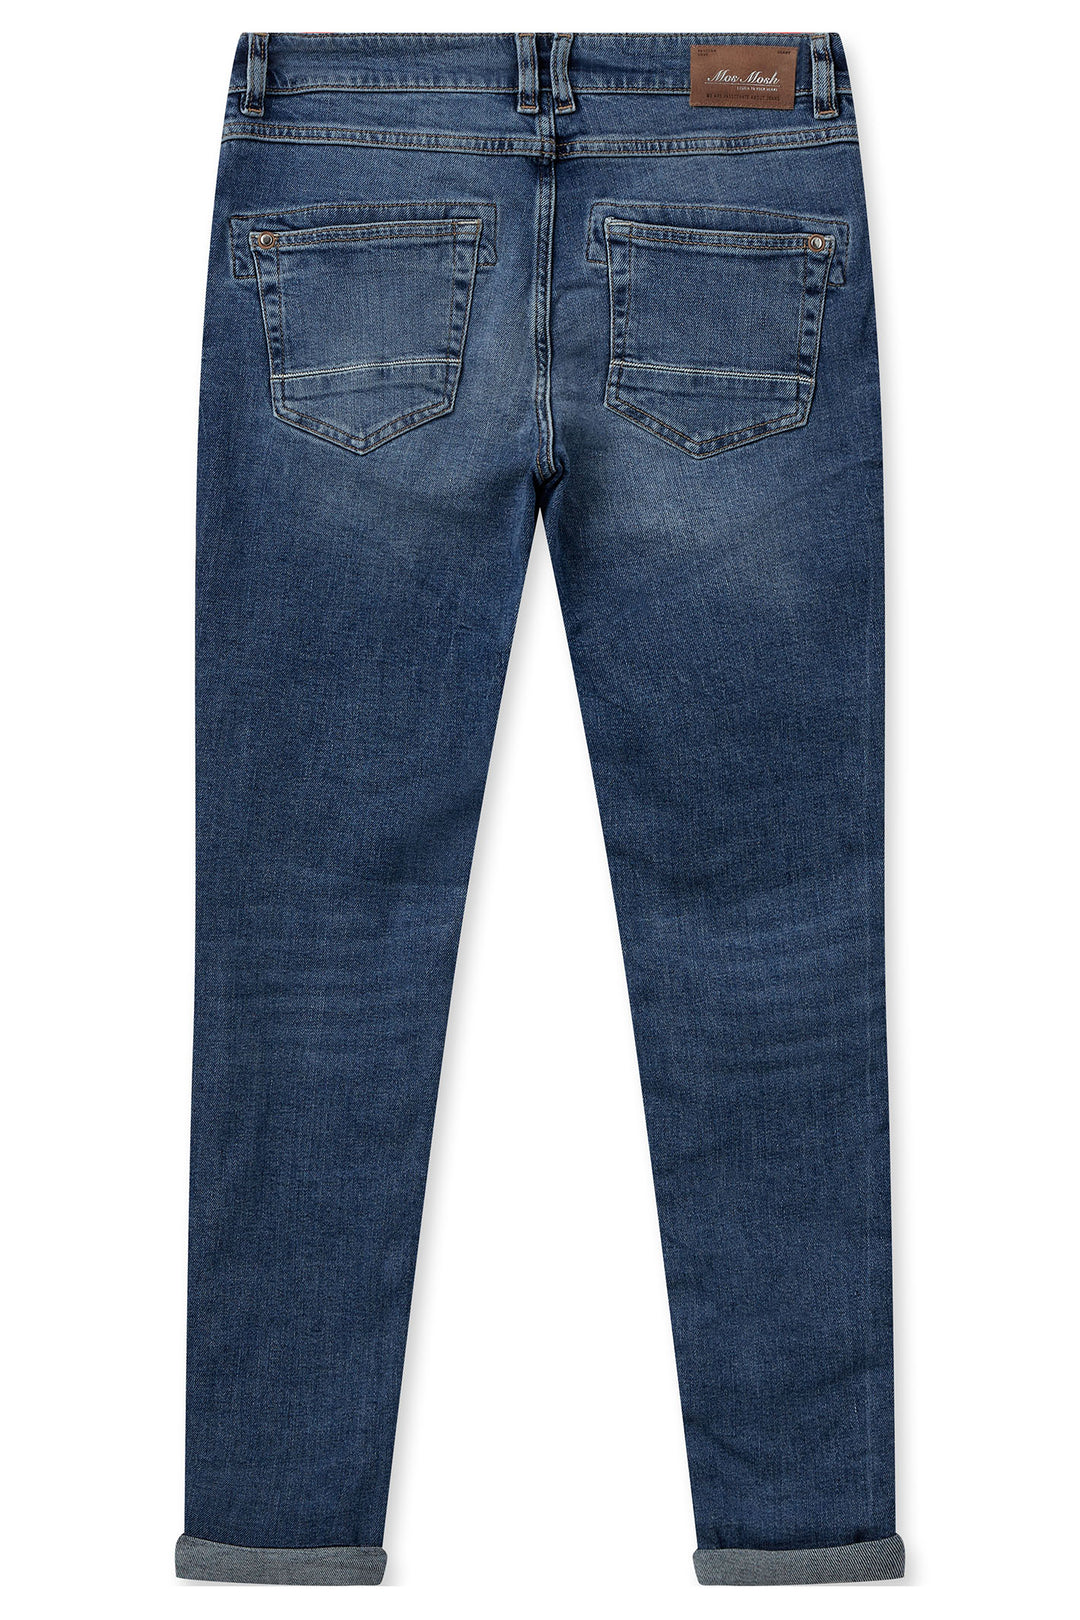 Mos Mosh 161490 MMNaomi Blue Mateos Regular Jeans - Dotique